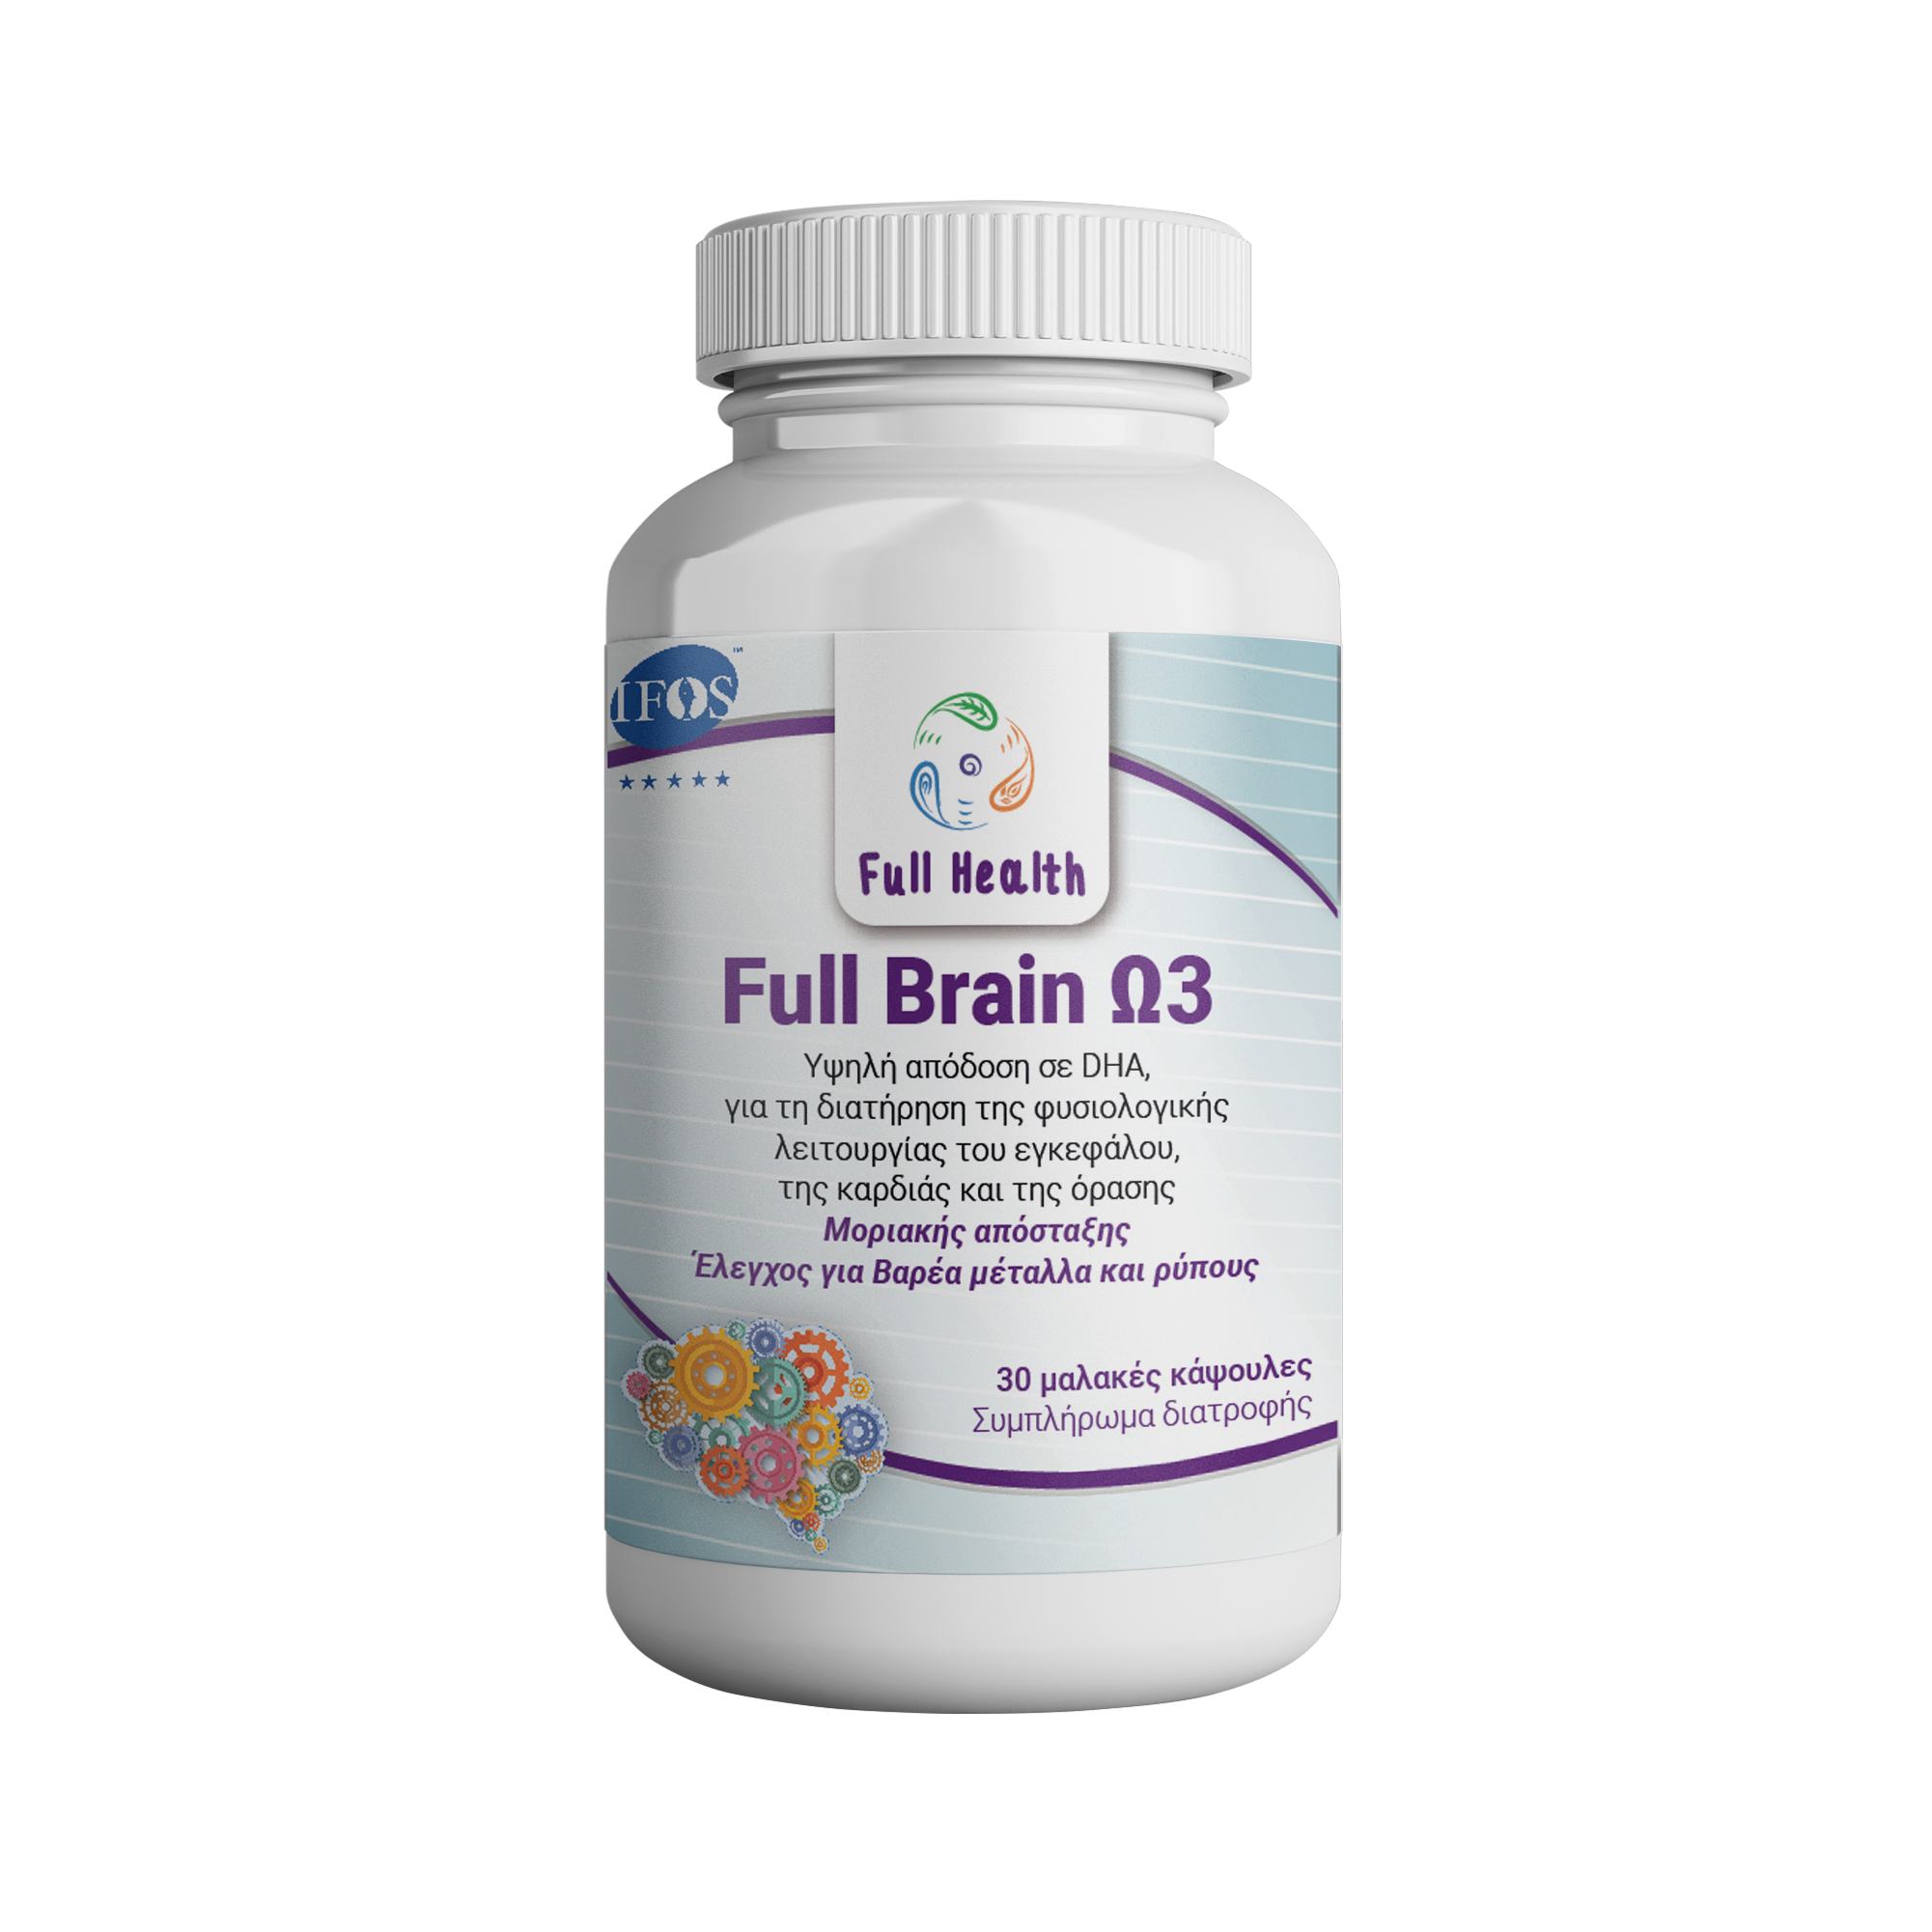 FULL HEALTH FULL BRAIN Ω3 30 softgels (Συμπλήρωμα διατροφής με μοριακώς απεσταγμένα ιχθυέλαια υψηλής συμπύκνωσης)